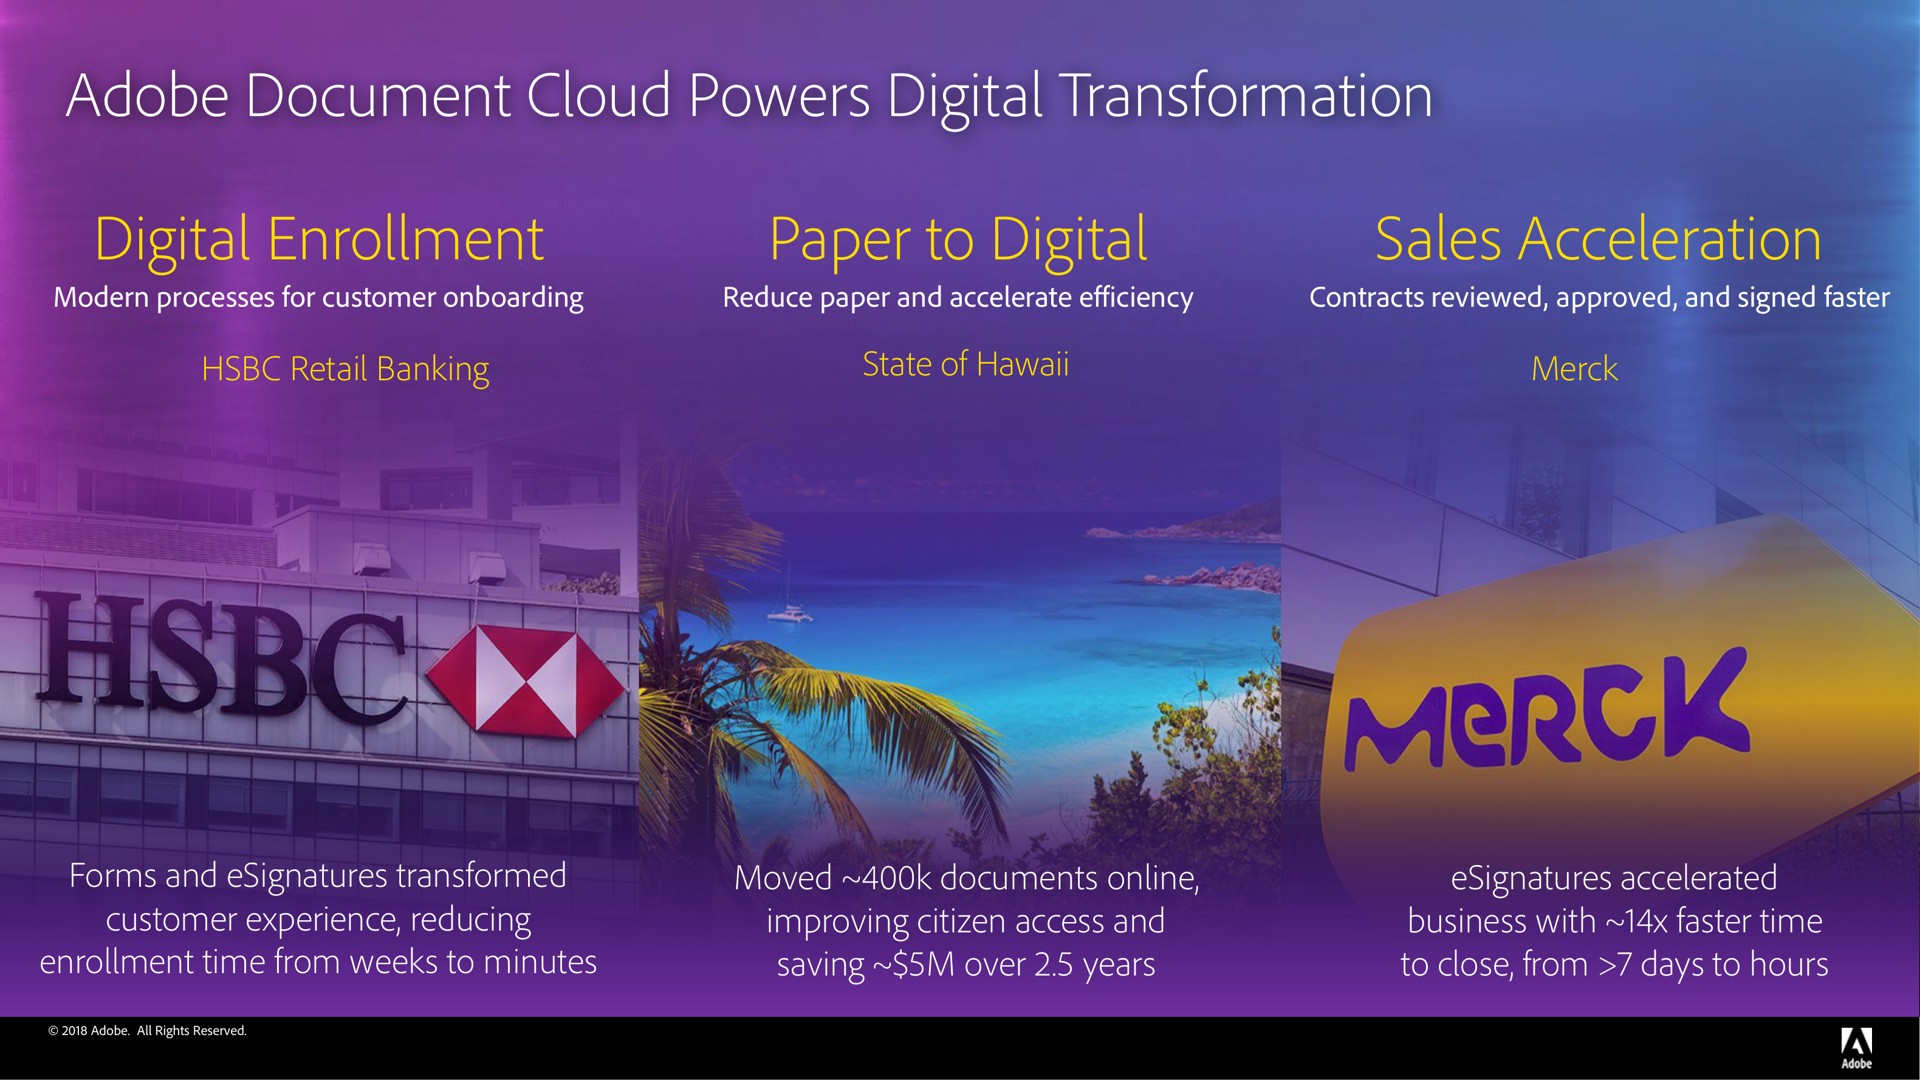 adobe document cloud powers digital transformation digital enrollment paper to digital sales acceleration | Adobe